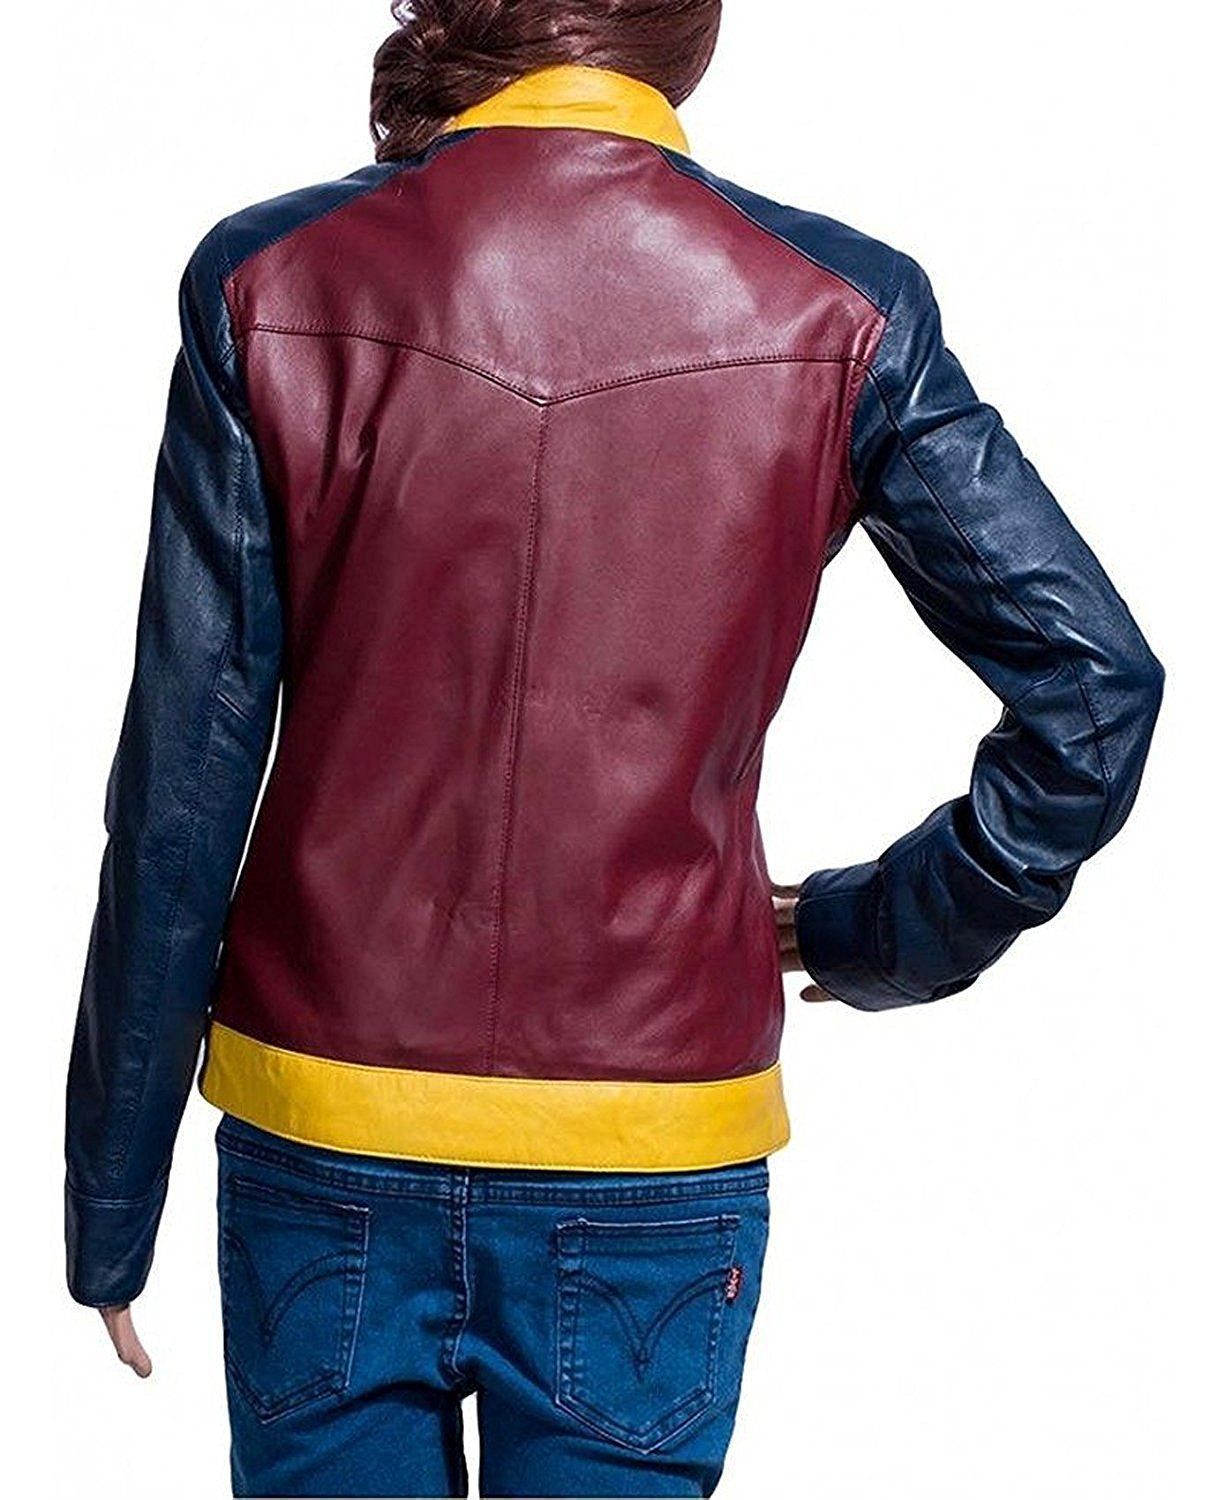 Wonder Woman Adrianne Palicki Costume Stylish Ladies Leather Jacket